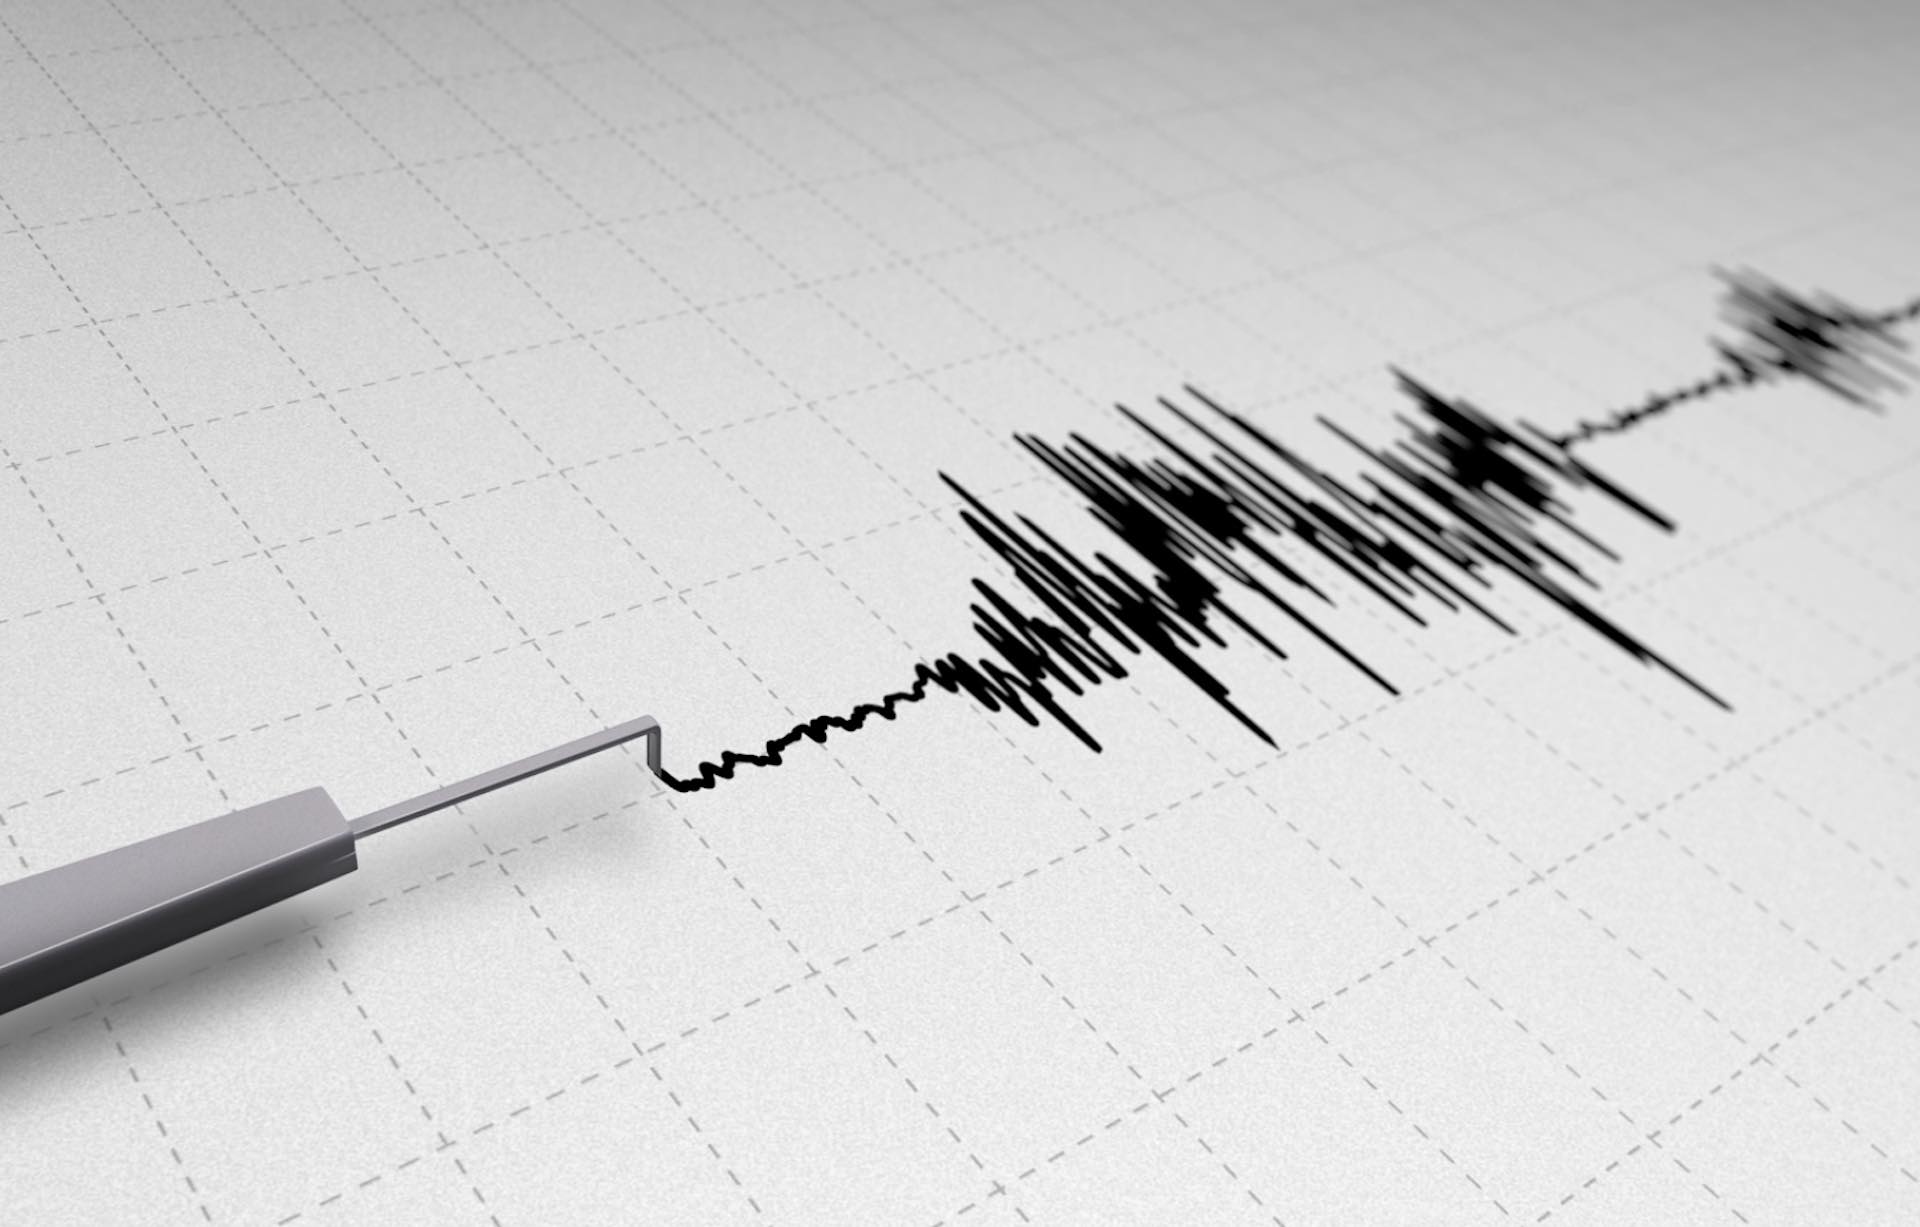 Earthquake of magnitude 5.1 rocks the Kermadec Islands in New Zealand